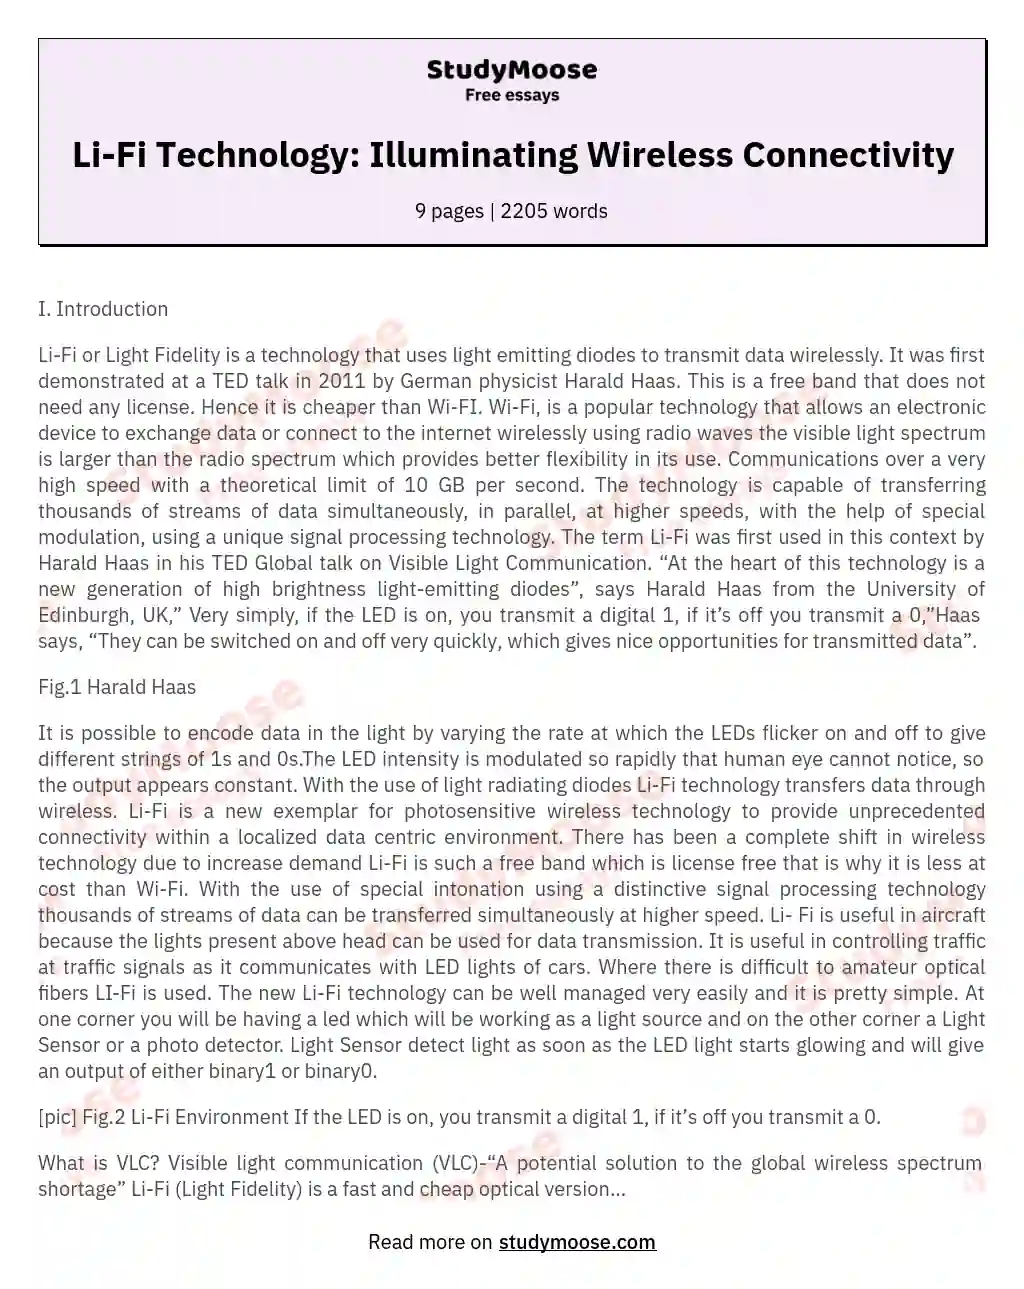 Li-Fi Technology: Illuminating Wireless Connectivity essay